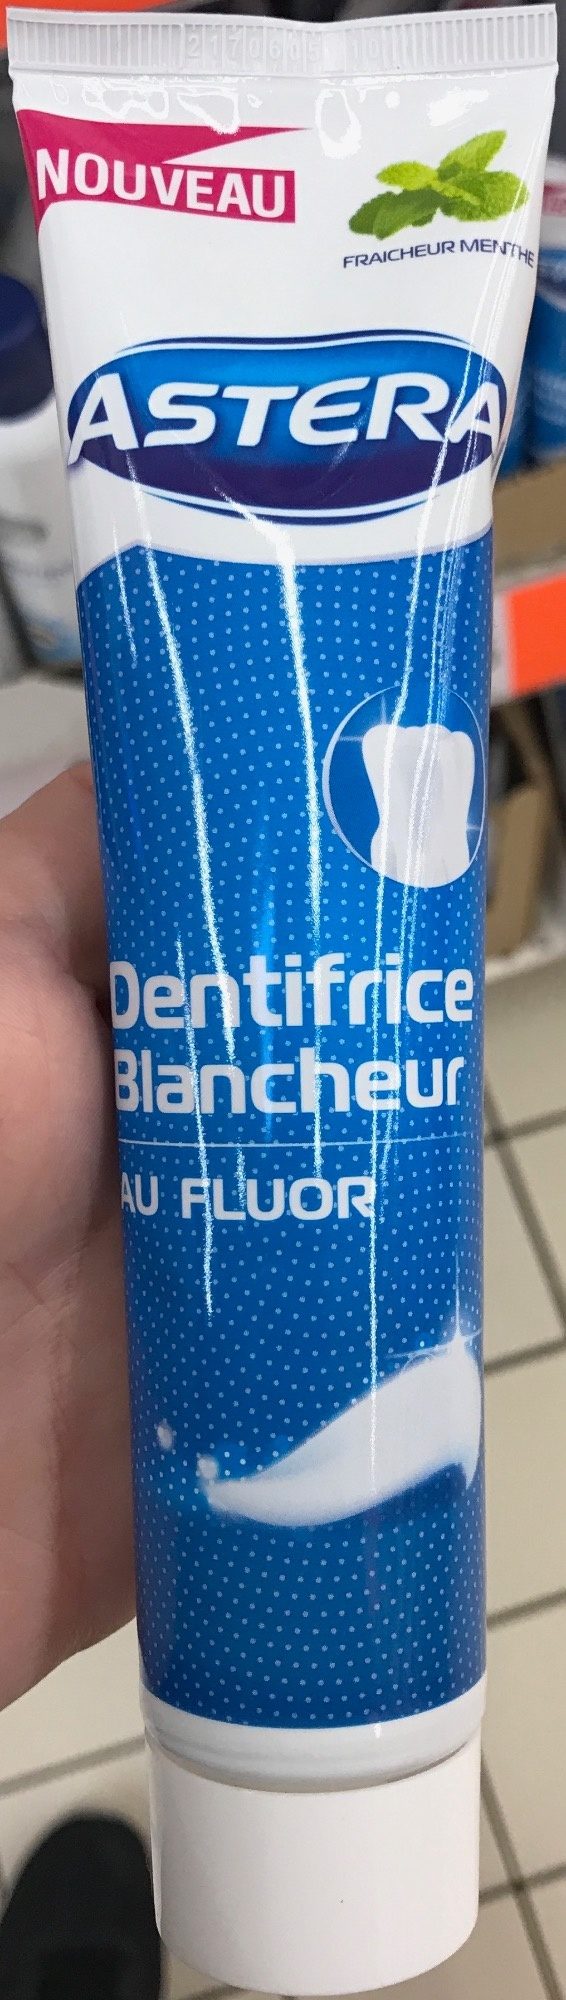 Dentifrice Blancheur au fluor - Product - fr